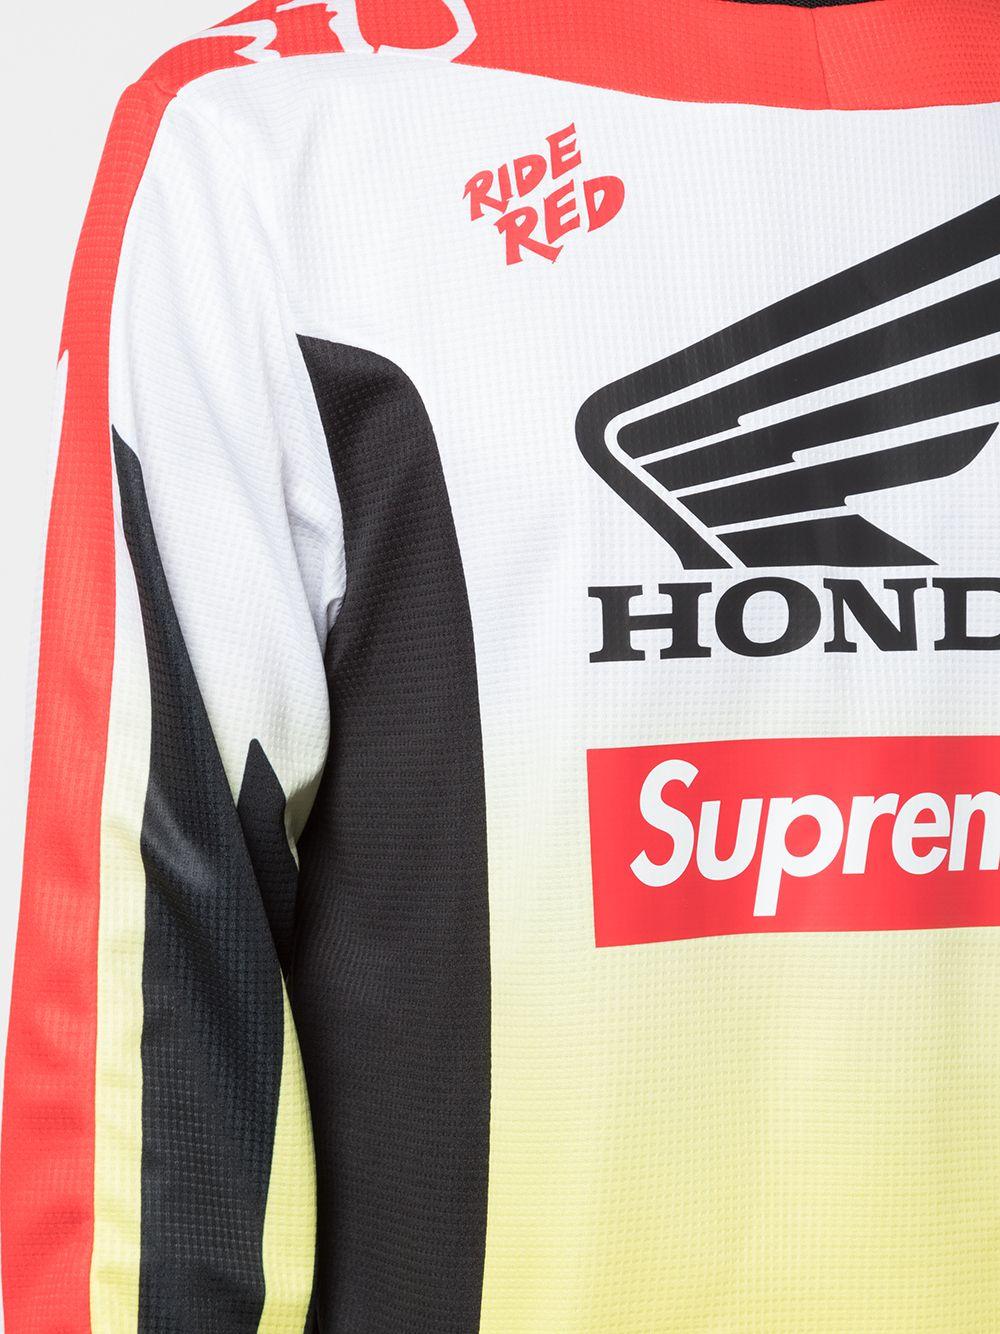 Supreme Honda Fox Racing Moto Jersey Top in Red for Men - Lyst